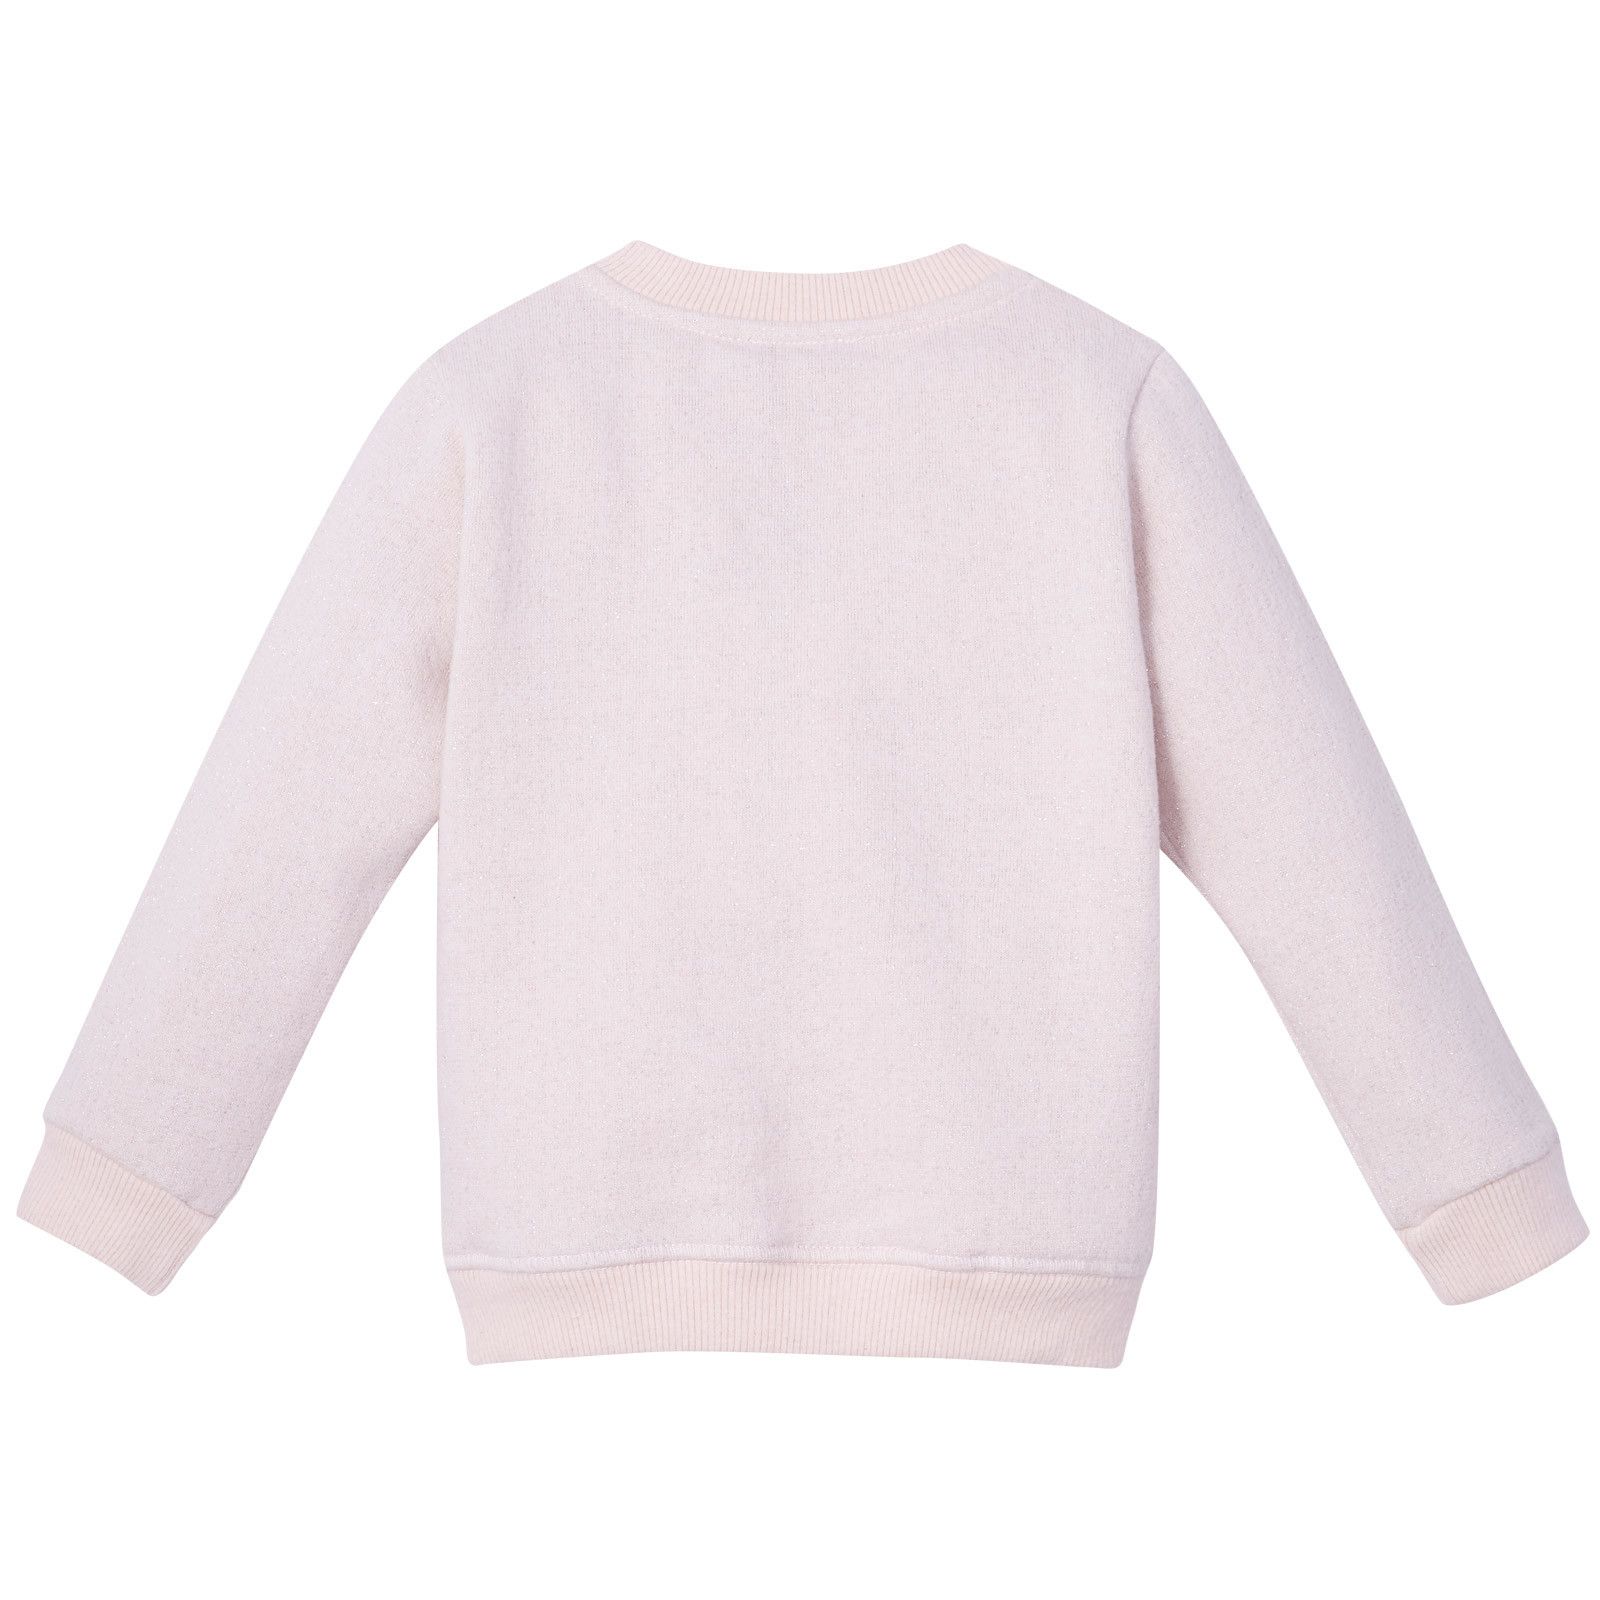 Girls Pink Shimmer Tiger Embroidered Sweatshirt - CÉMAROSE | Children's Fashion Store - 2